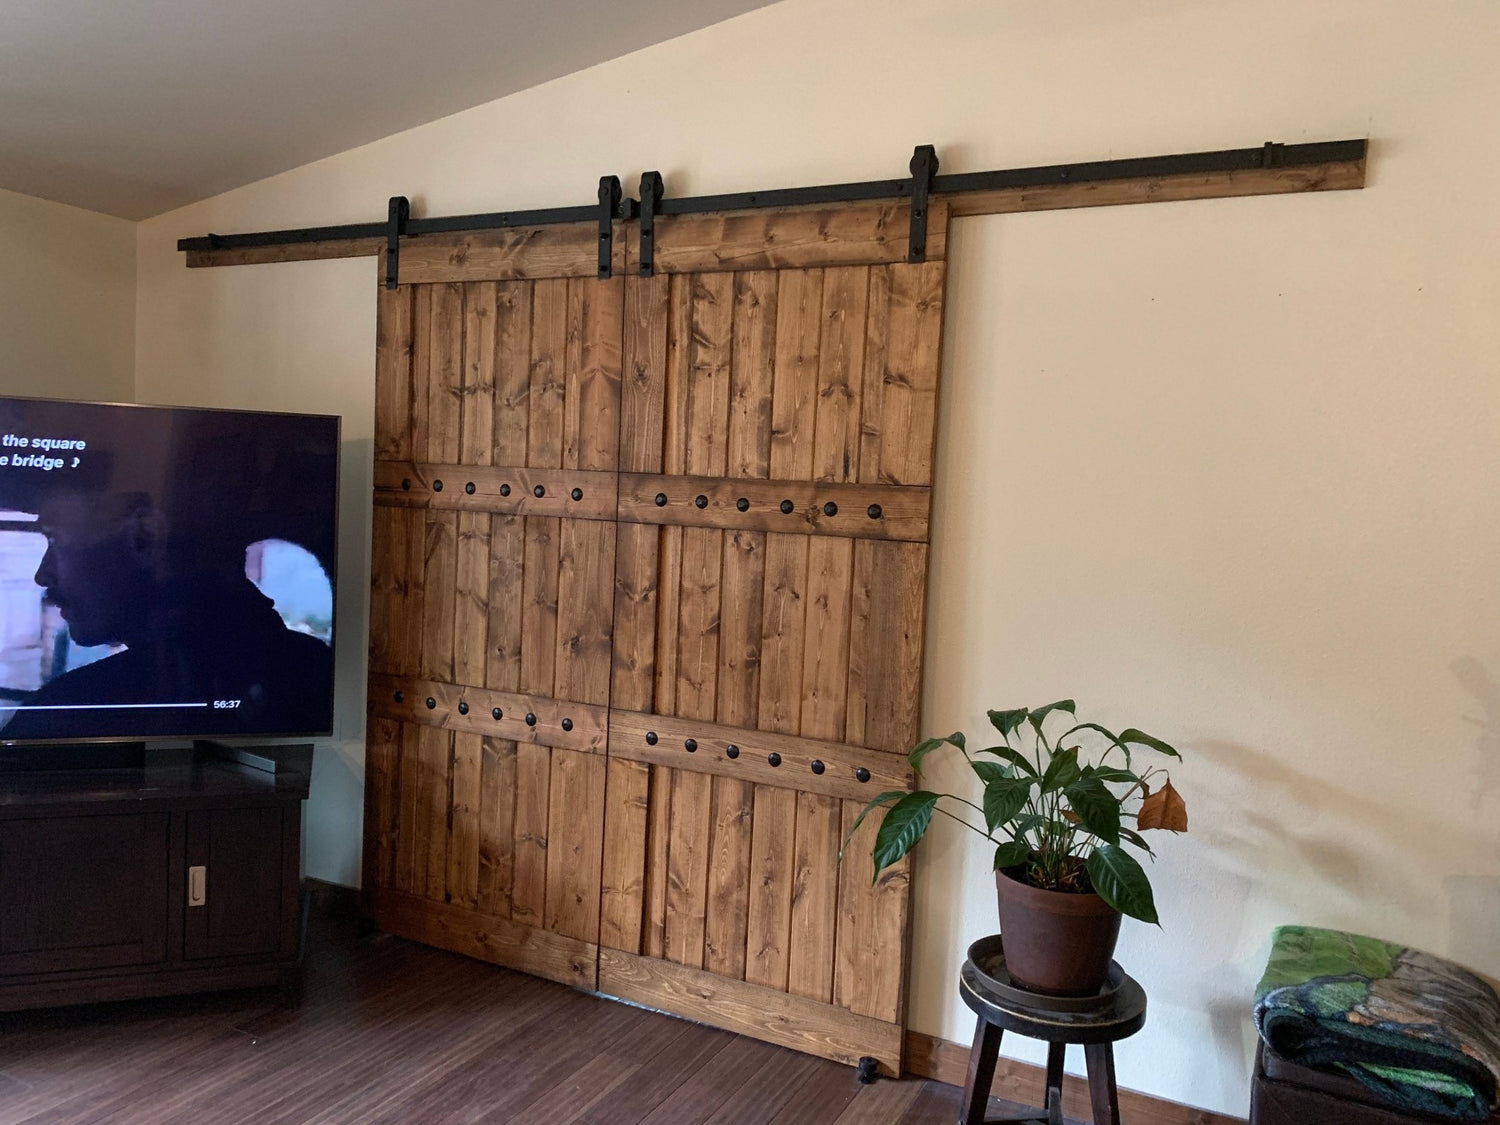 Television on a wooden floor next to the Custom Double Horizon Barn Door